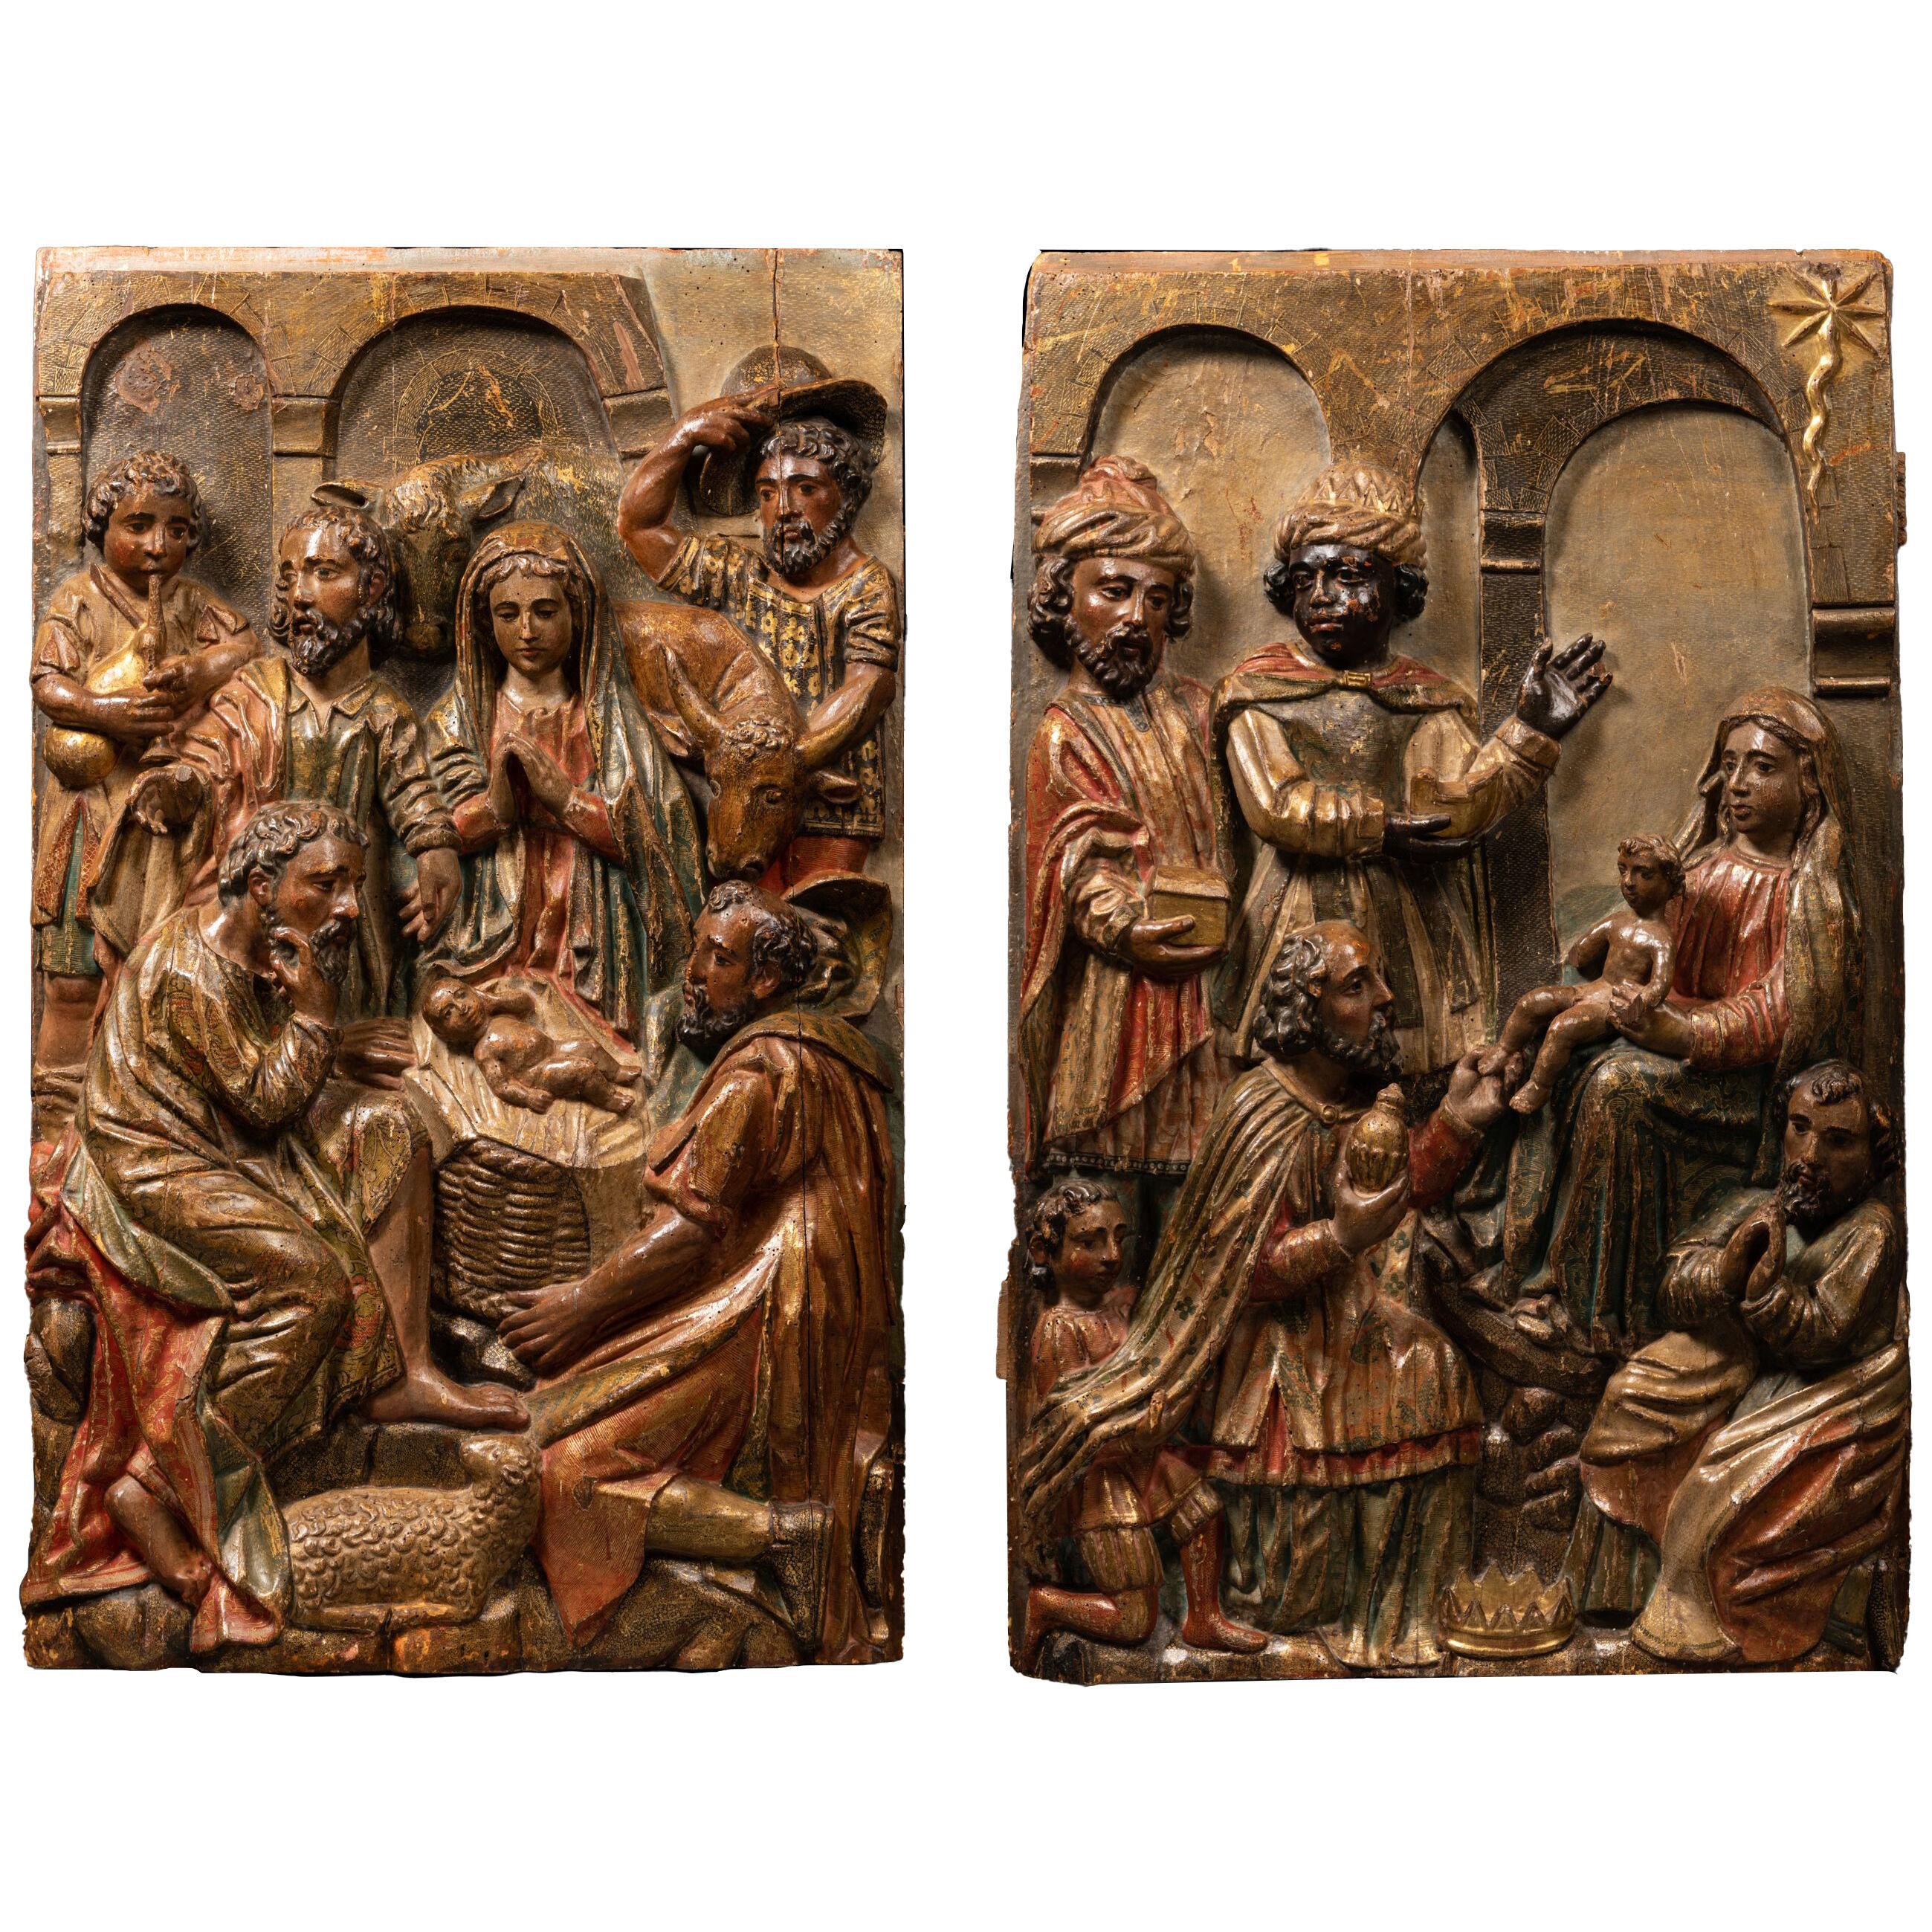 Two altarpiece panels Spanish Renaissance - 16th century – Spain